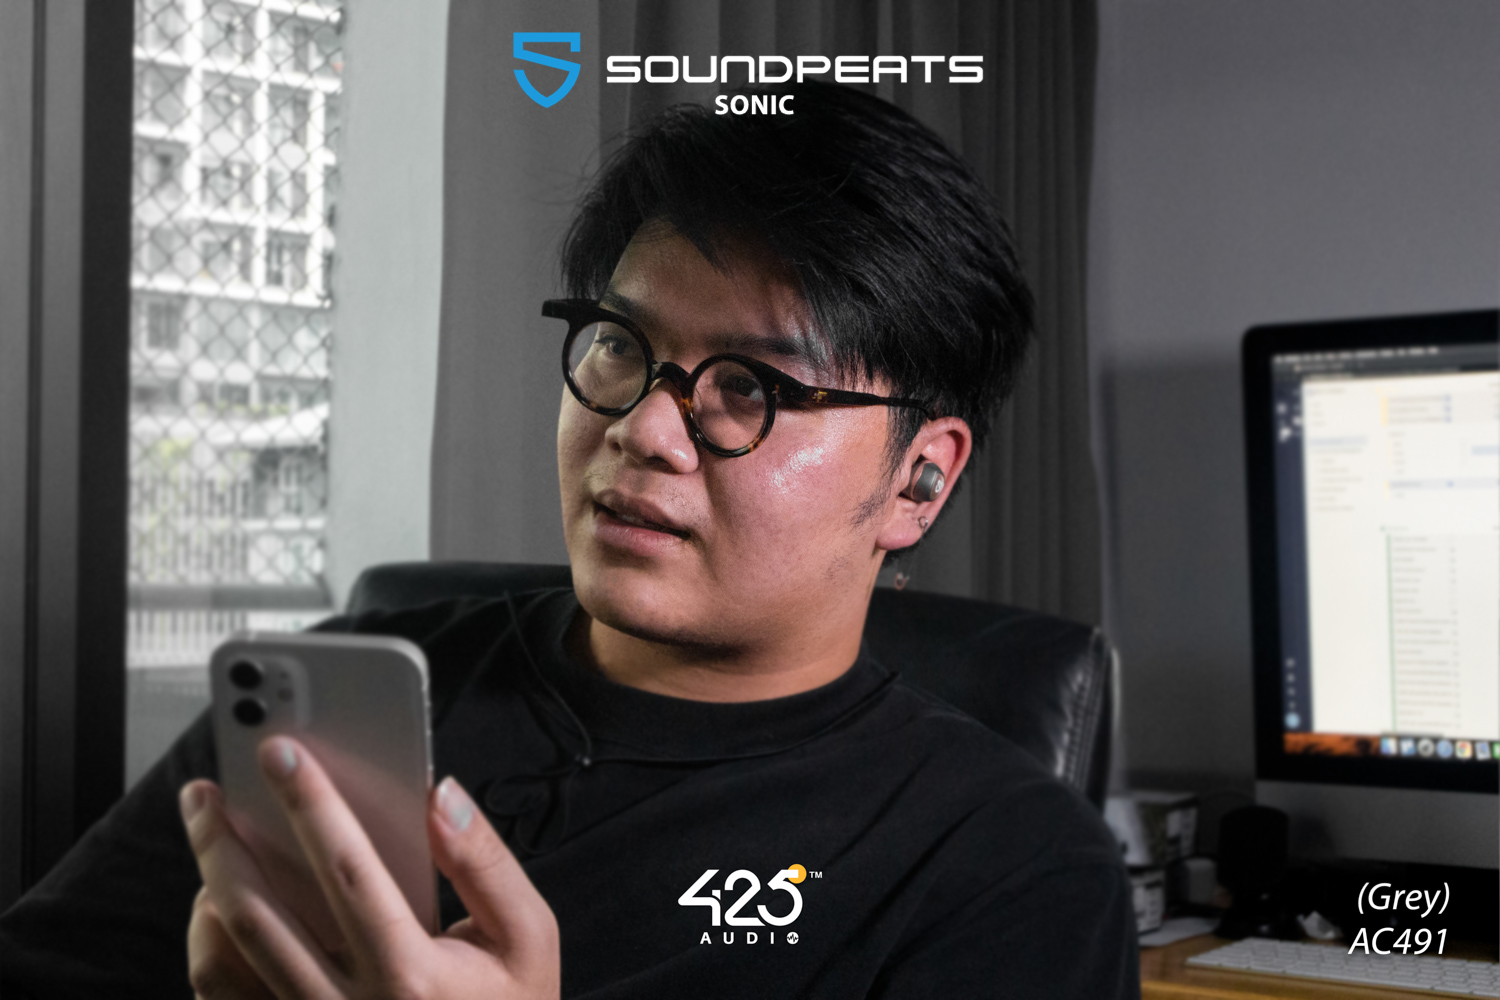 soundpeats sonic,soundpeats,bluetooth 5.2,game mode,in-ear,true wireless,เบสหนัก,เสียงดี,เล่นเกมไม่ดีเลย์,กันนํ้า,ipx5,แบตอึด,grey,ios,android